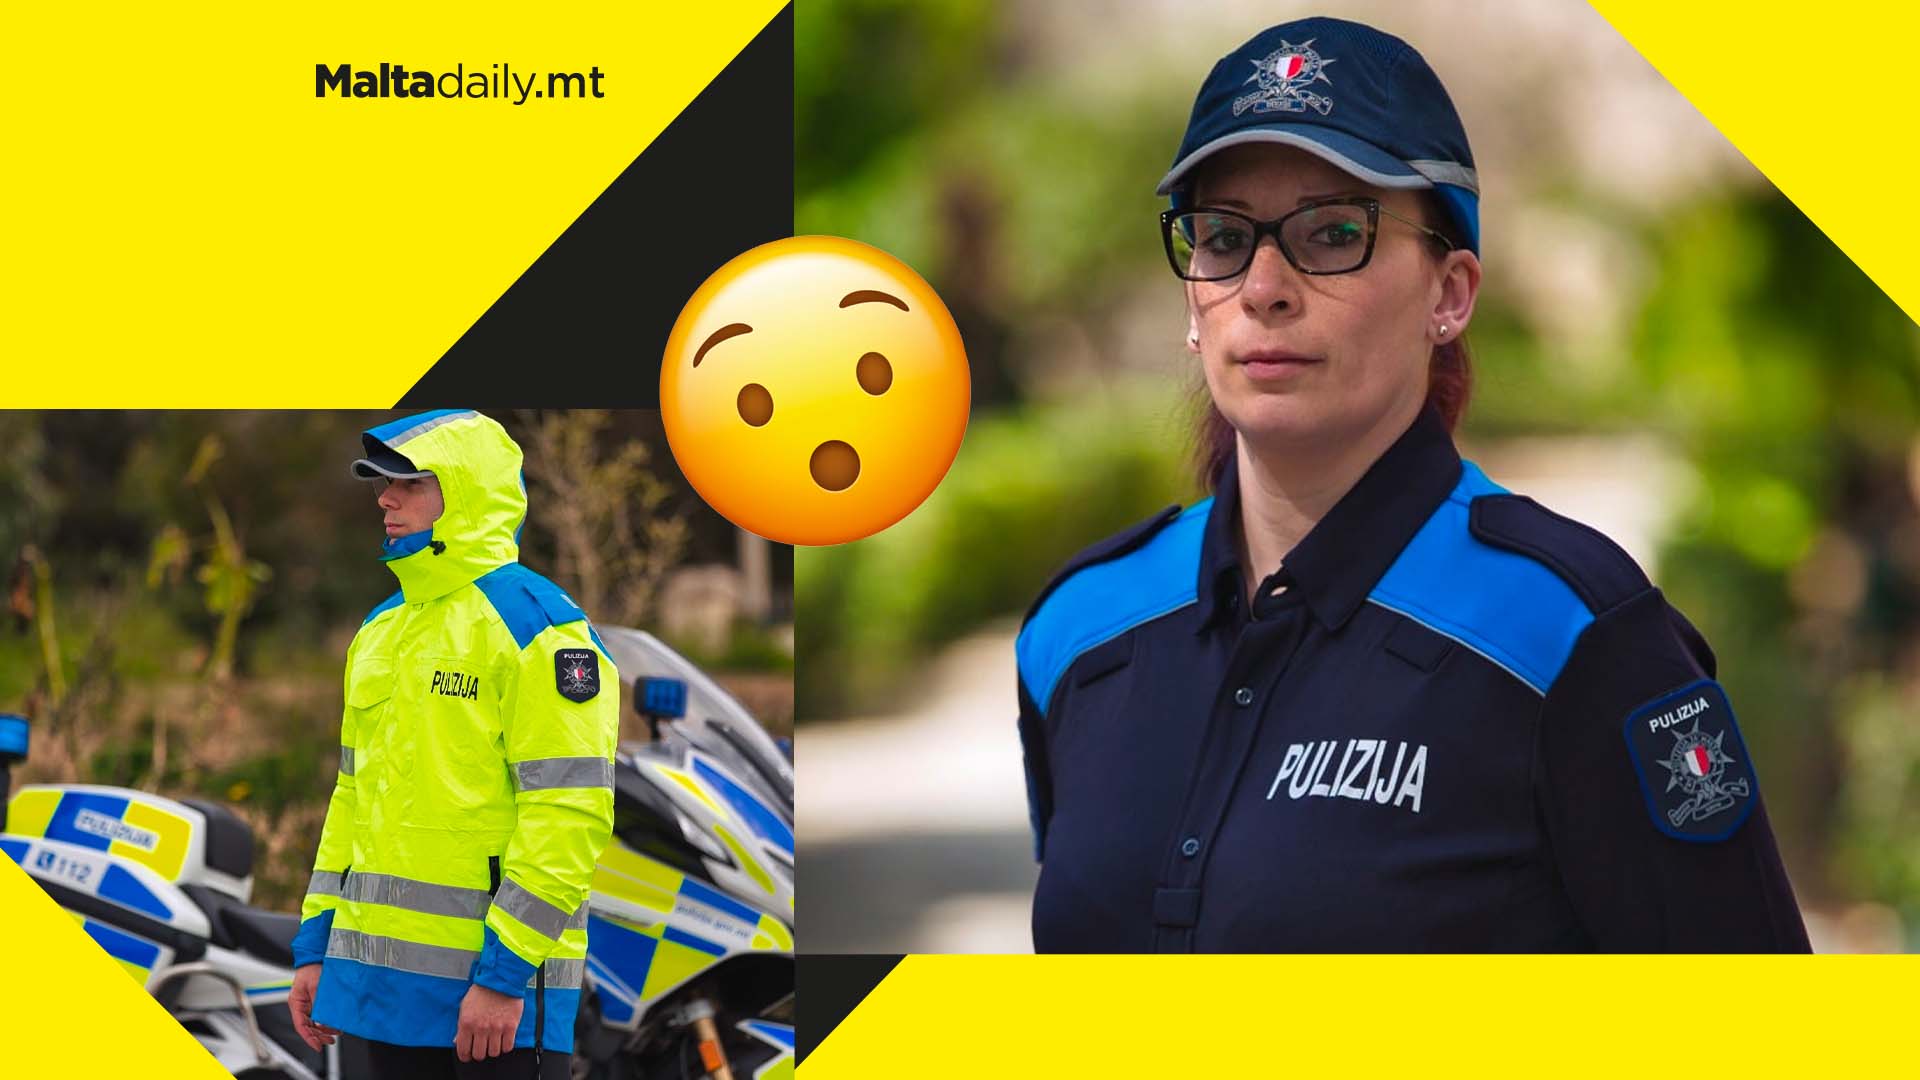 Malta Police Force unveils brand new uniforms